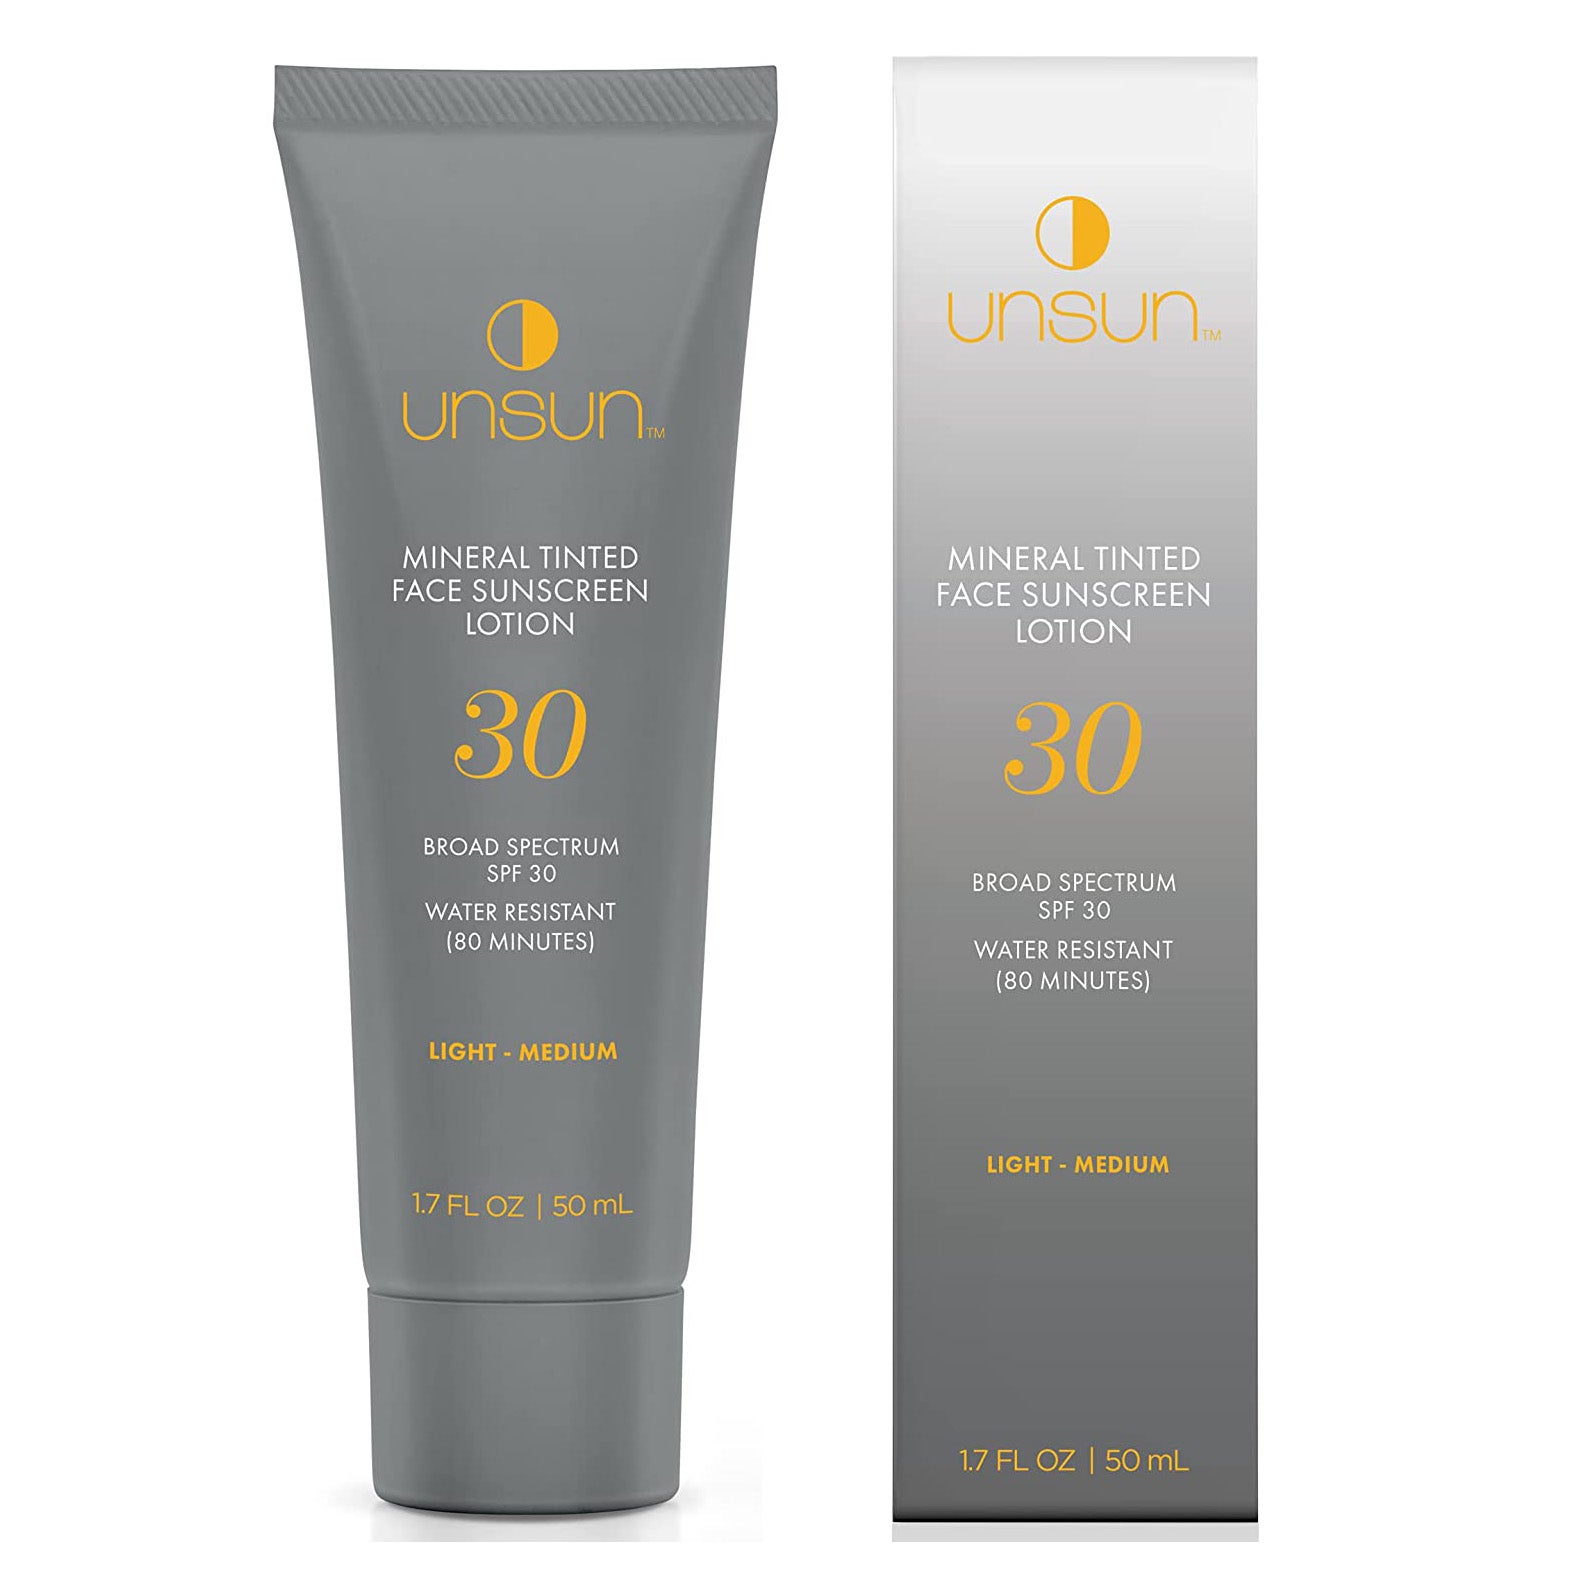 Unsun Mineral Tinted Face Sunscreen with SPF 30 - Light/Medium